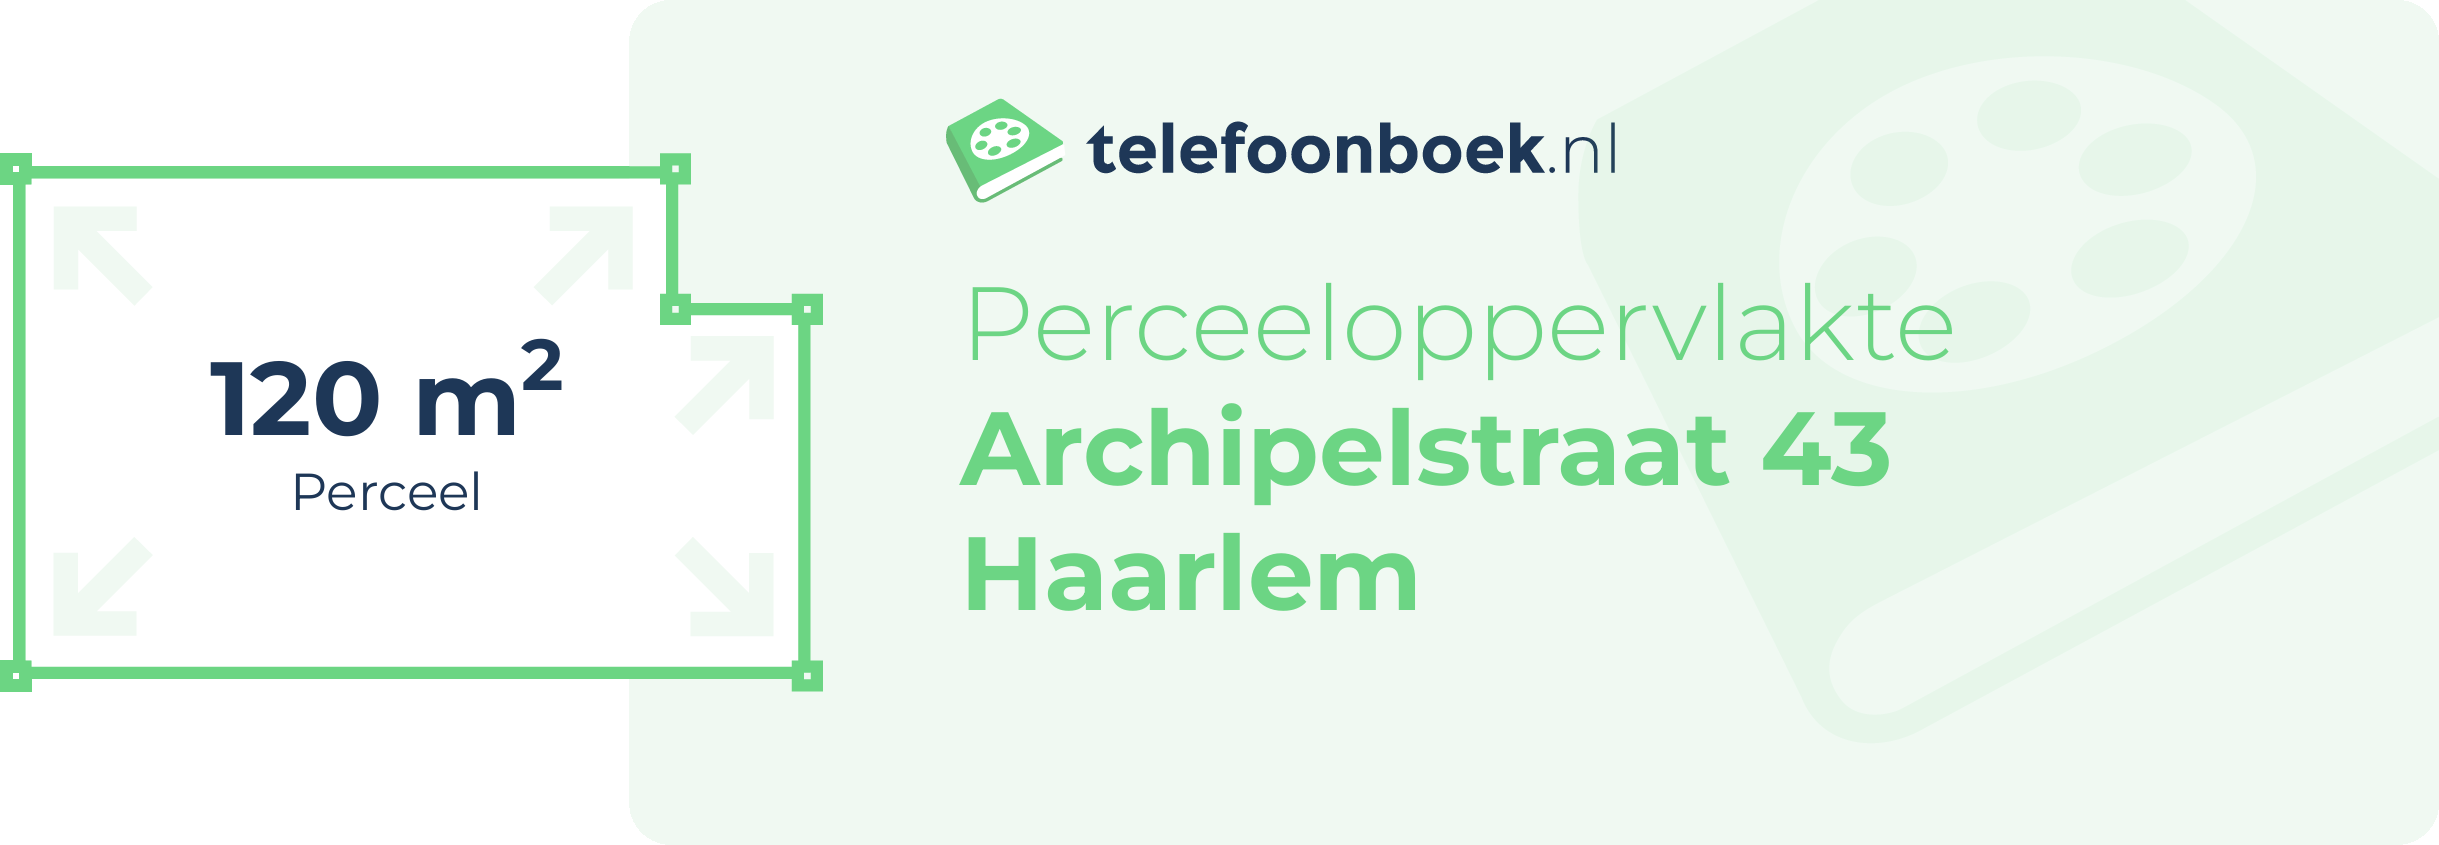 Perceeloppervlakte Archipelstraat 43 Haarlem